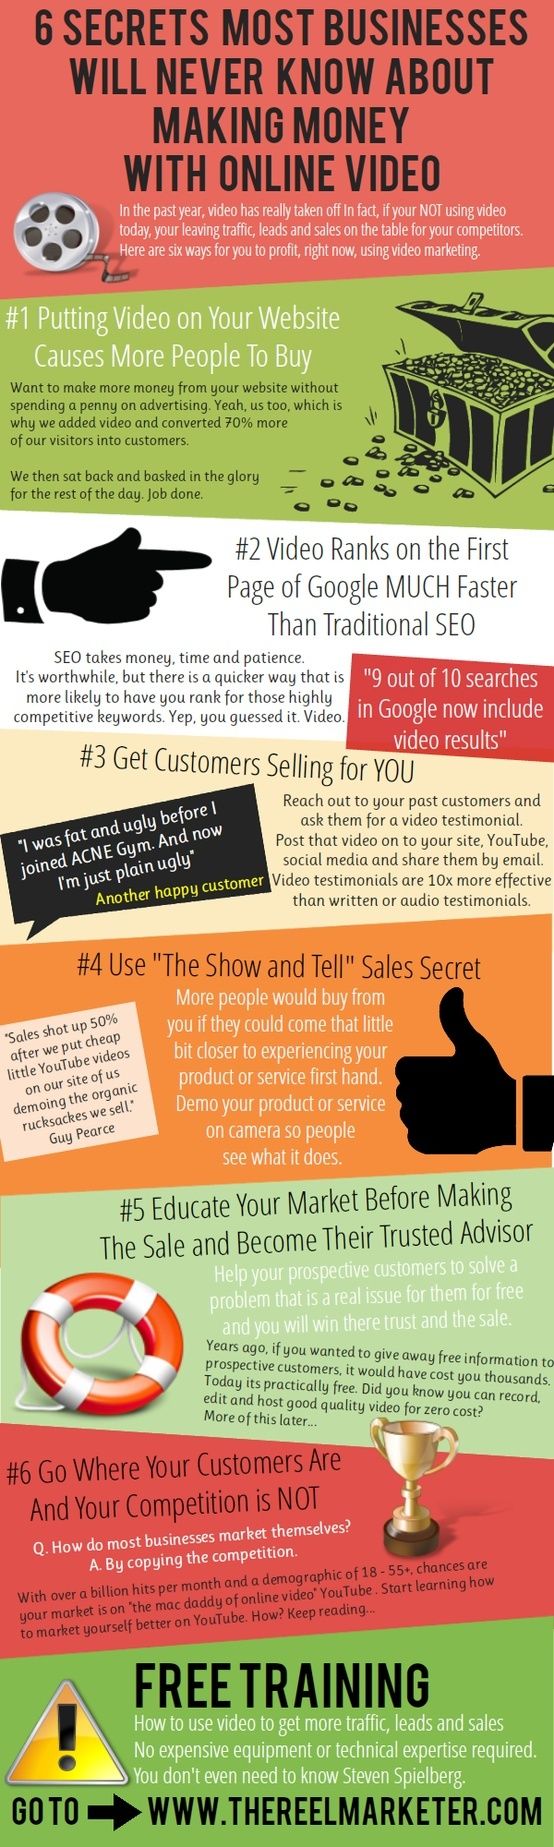 Video marketing online: 6 consigli utili per renderlo efficace. Infografica